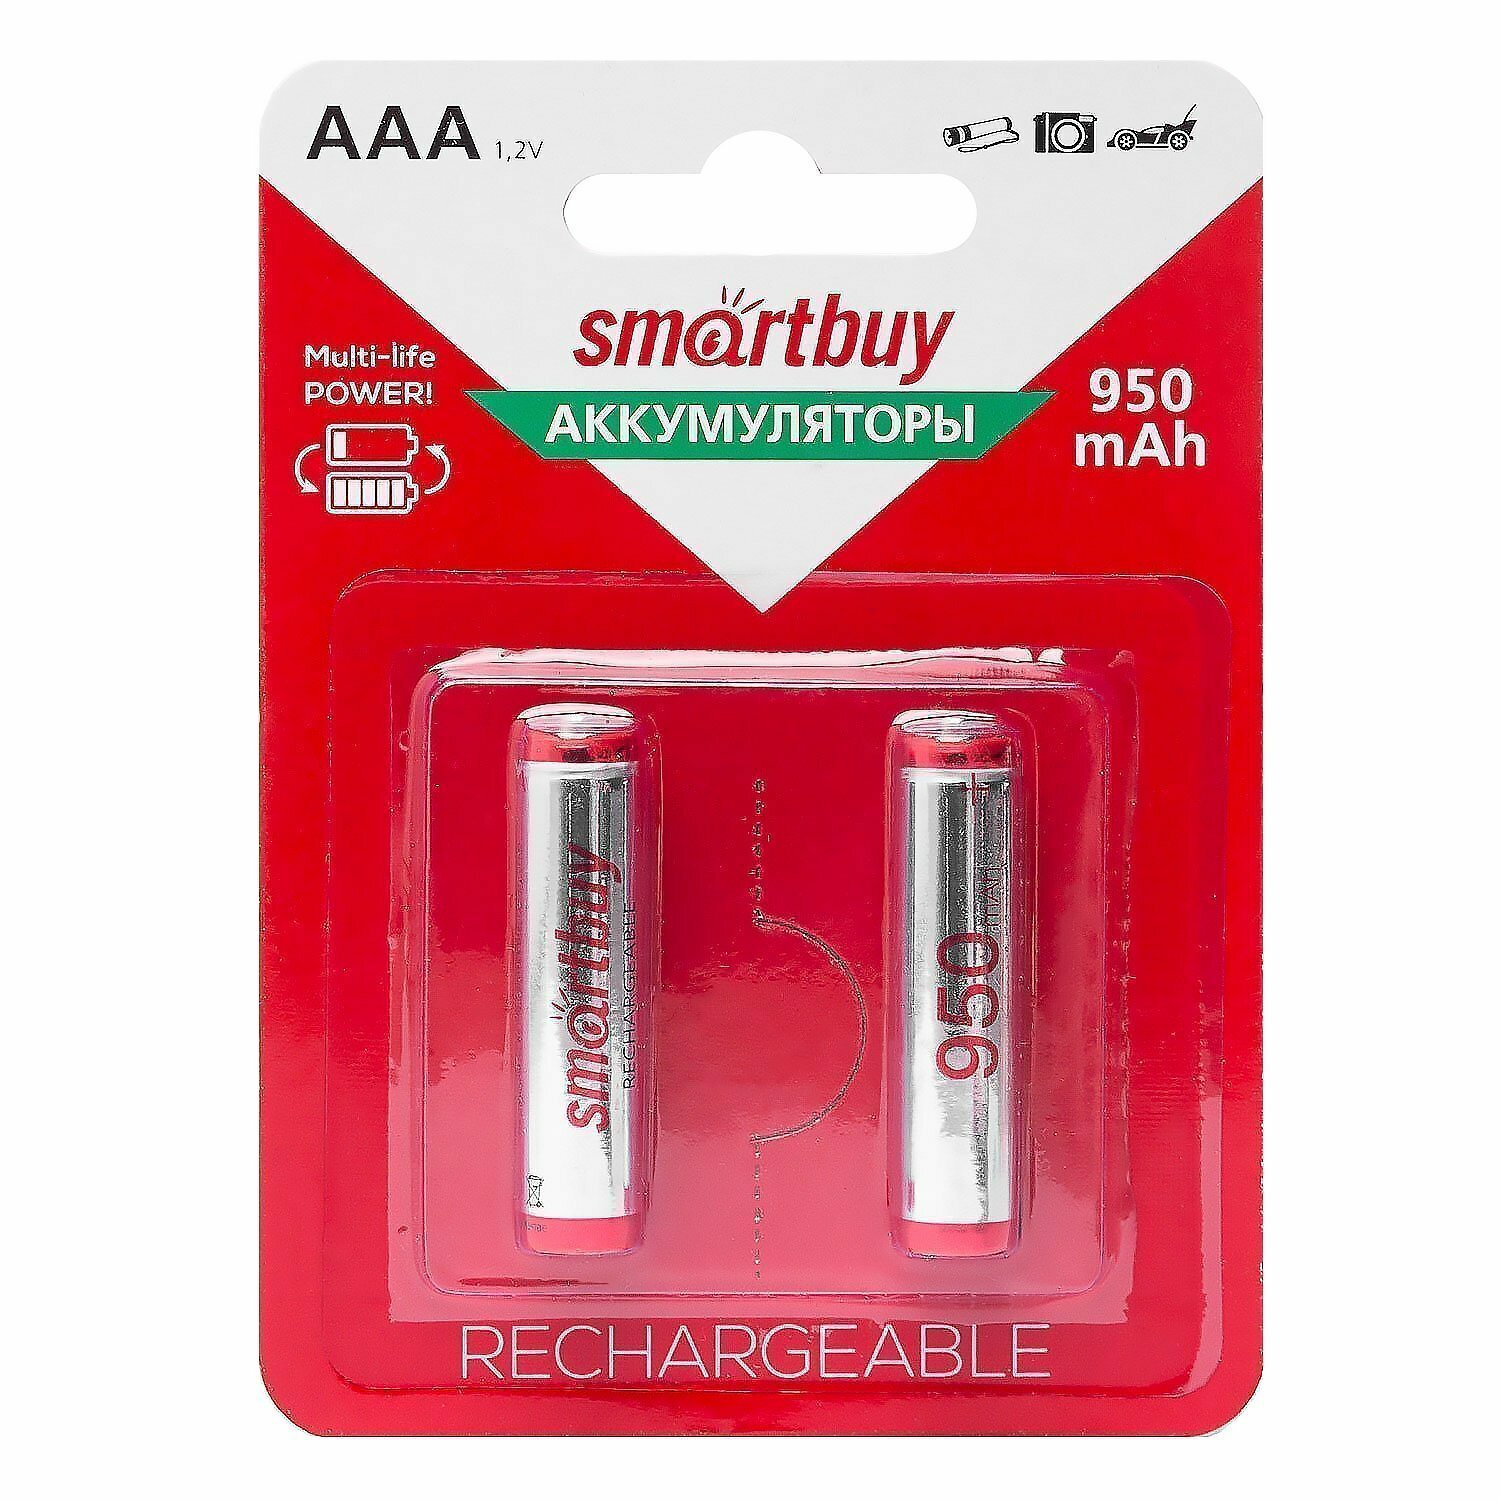 Аккумуляторные батарейки AAA Smart Buy, Ni-MH, 950 mAh, 2 шт в упаковке